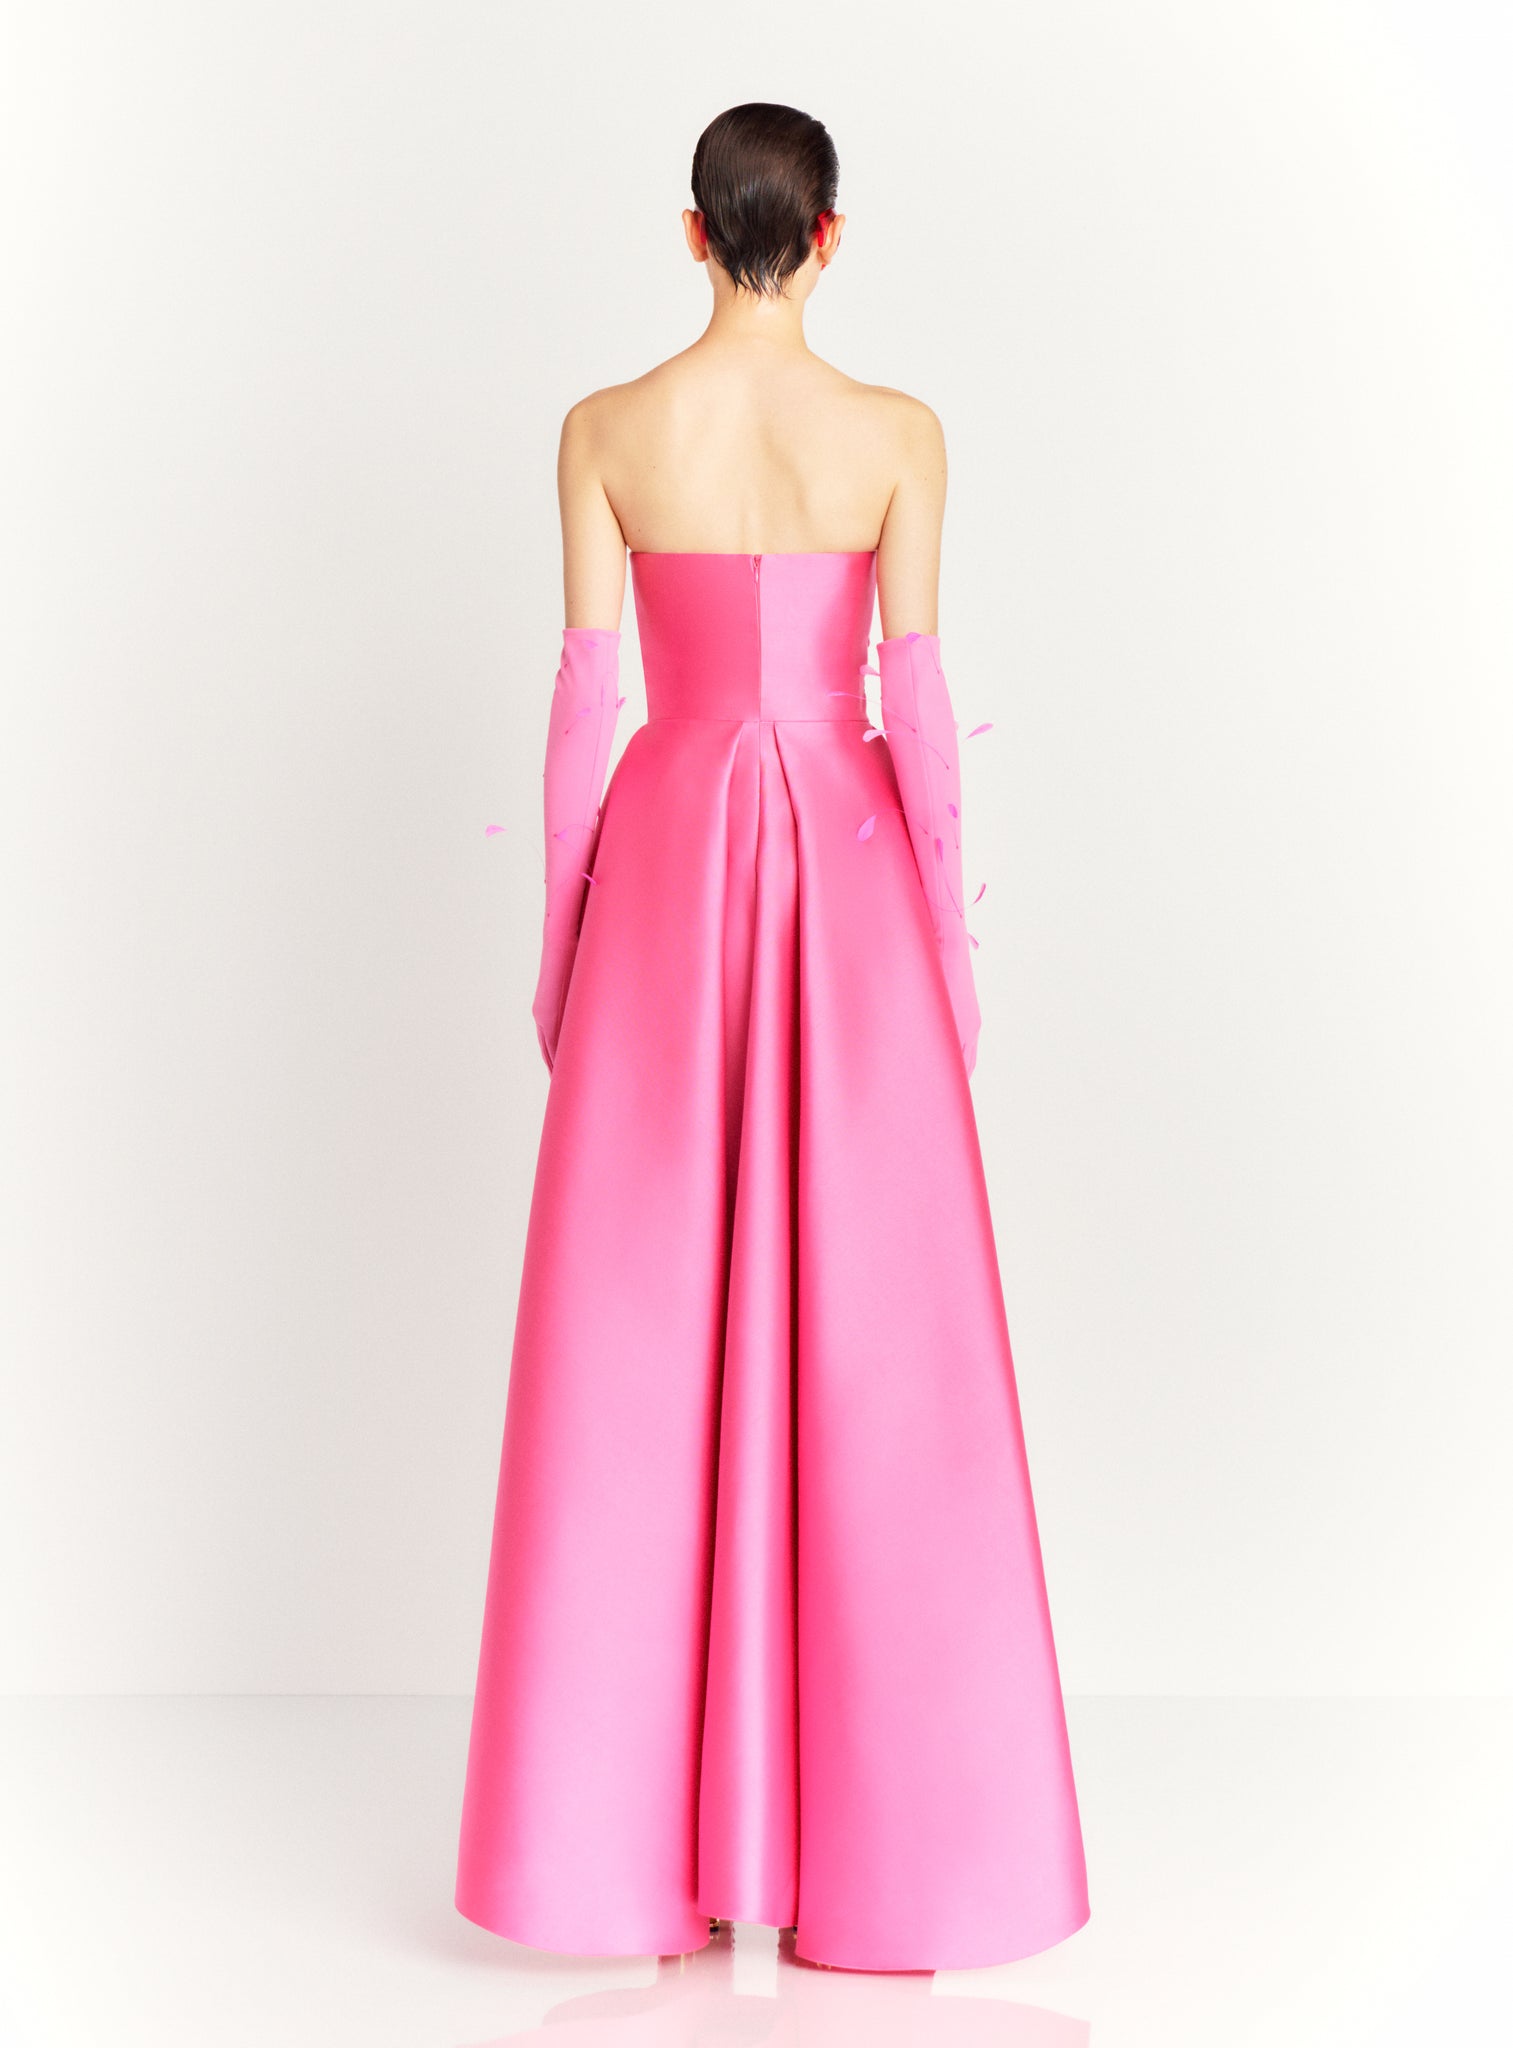 The Tiffany Maxi Dress in Light Pink